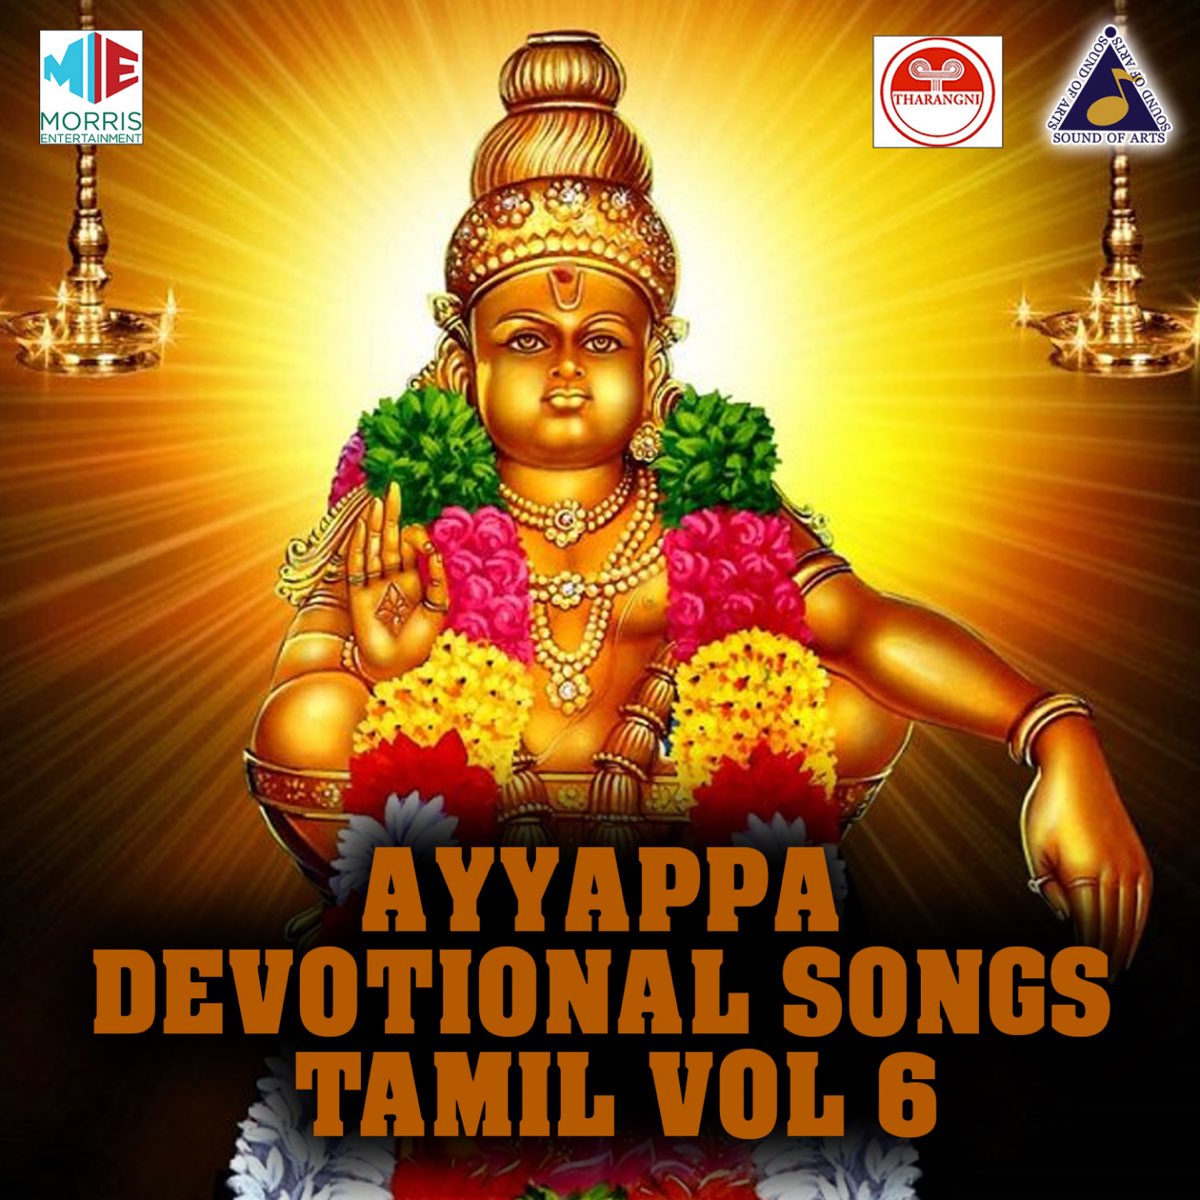 Ayyappa Devotional Songs Tamil, Vol. 6 by K. J. Yesudas on Apple Music